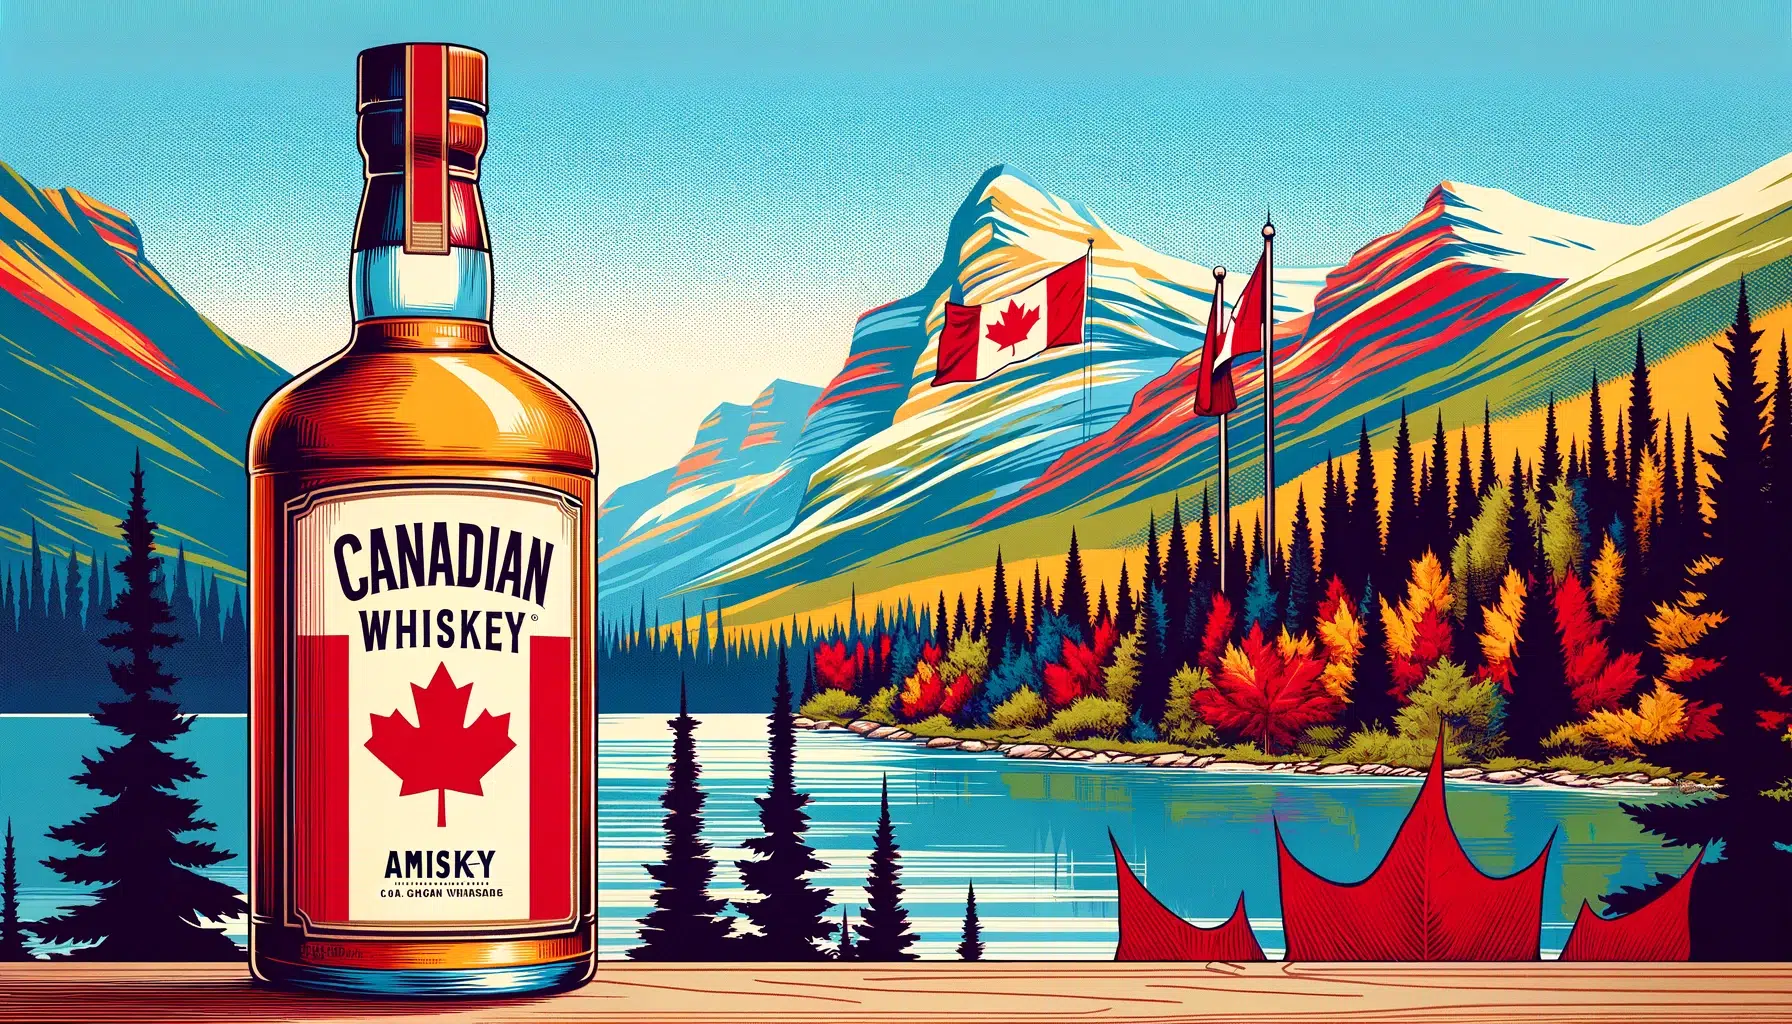 Canadian whiskey bottle with scenic mountainous backdrop.